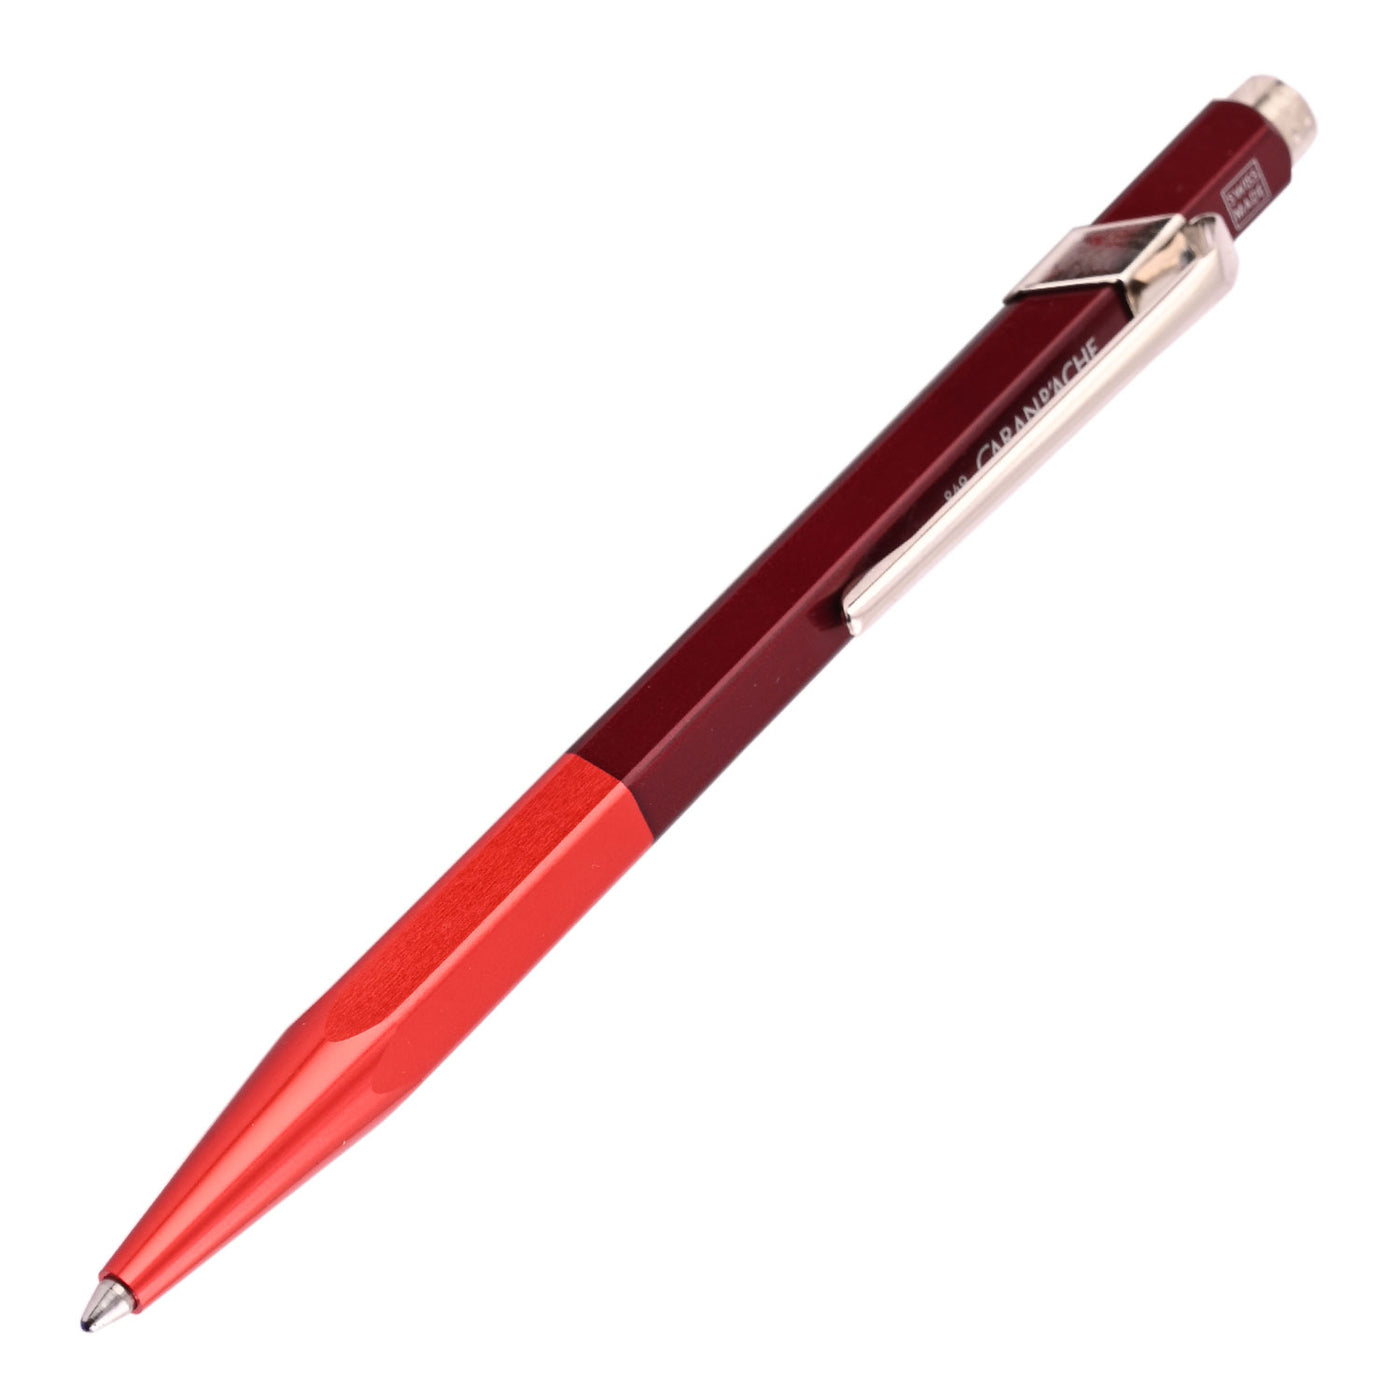 Caran d'Ache 849 Wonder Forest Ball Pen - Red (Limited Edition) 1